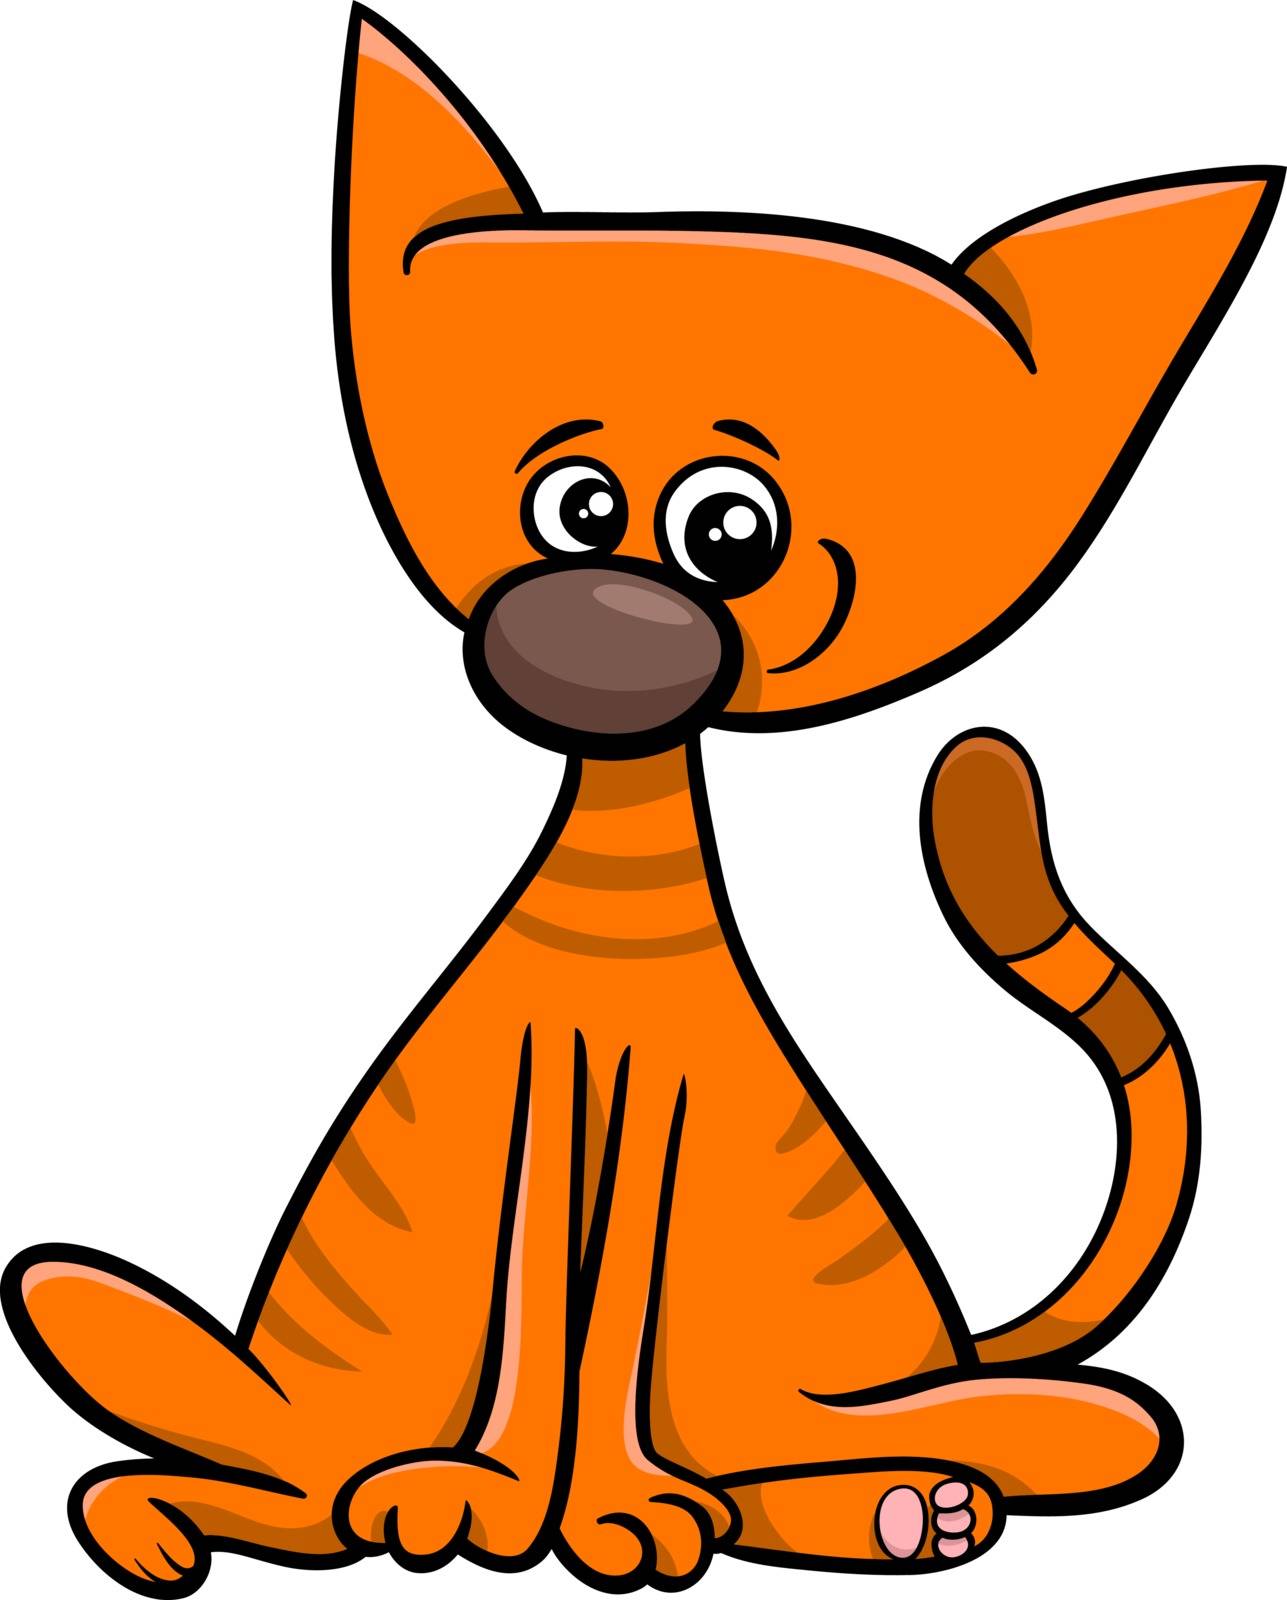 Cartoon Illustration of Funny Cat or Kitten Pet Animal Character